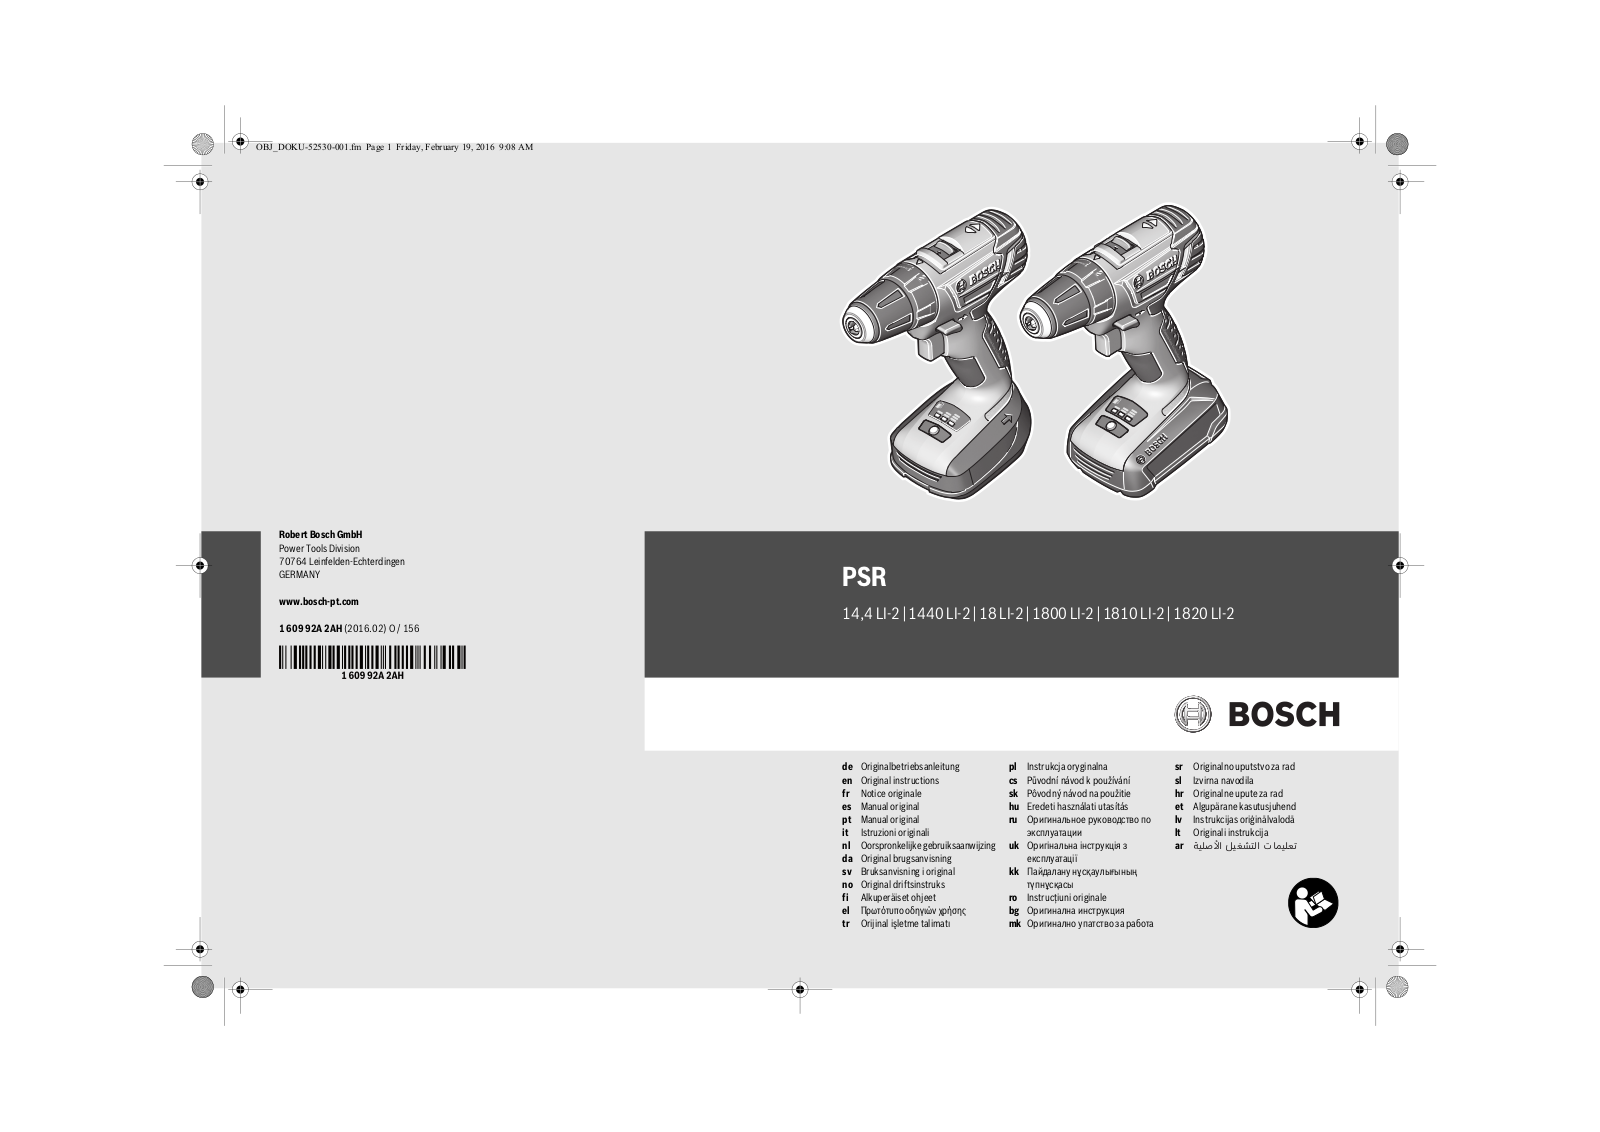 Bosch PSR 1800 LI-2 User Manual